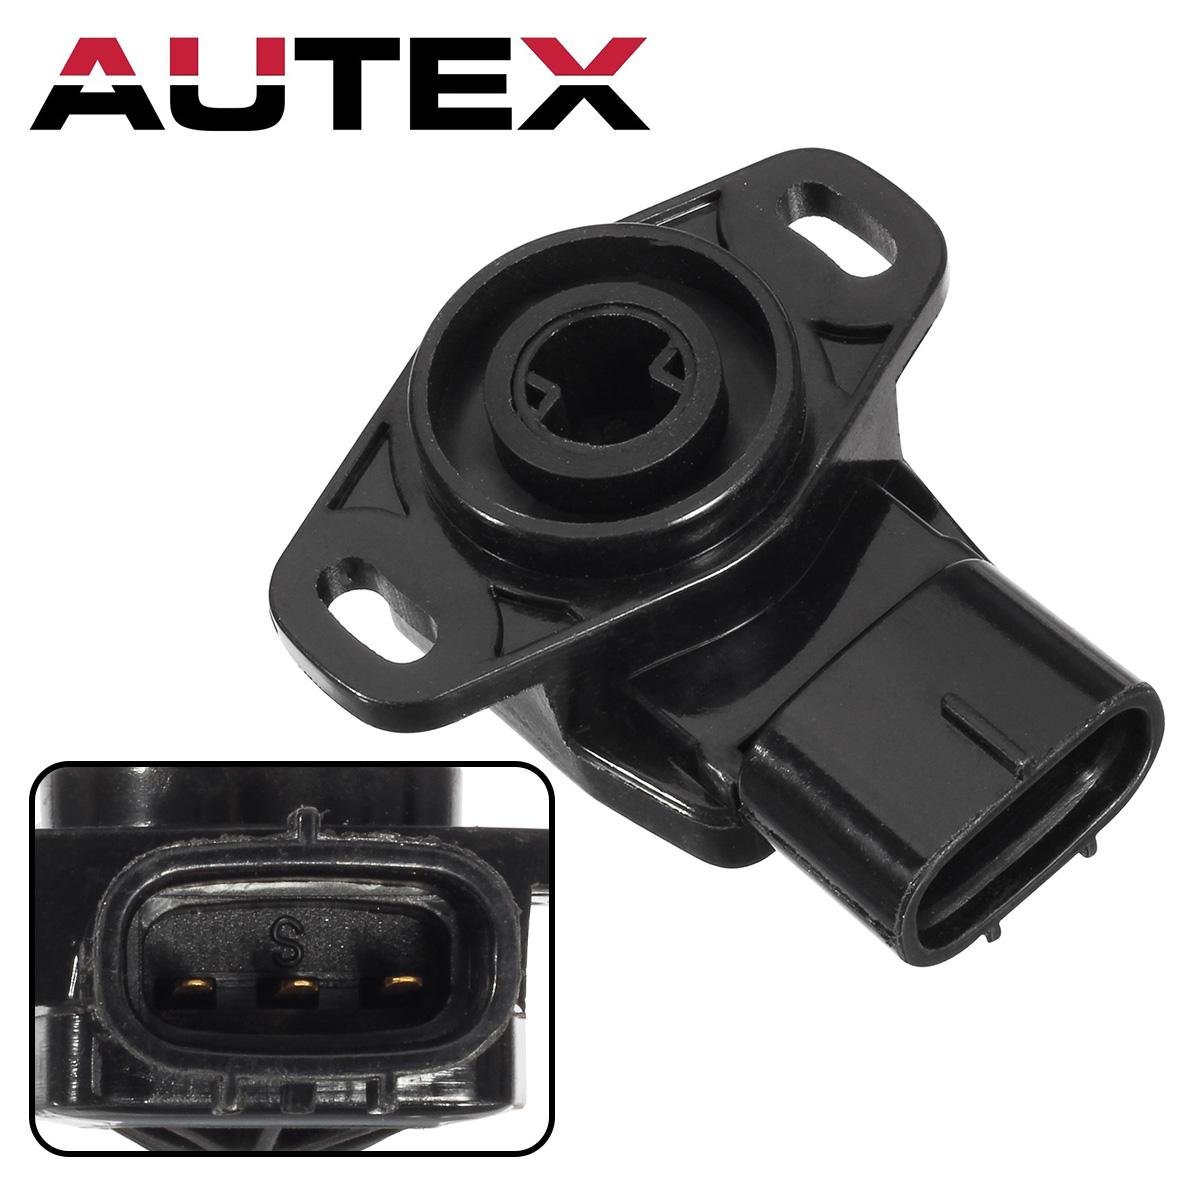 Autex Throttle Position Sensor TH296 TPS Sensor compatible with Chevrolet Tracker 1999 2000 2001 2002 2003 2004 2005 2006 2007 08 Suzuki Vitara 1999 2000 2001 2002 2003 Suzuki XL-7 2002 03 04 05 06 